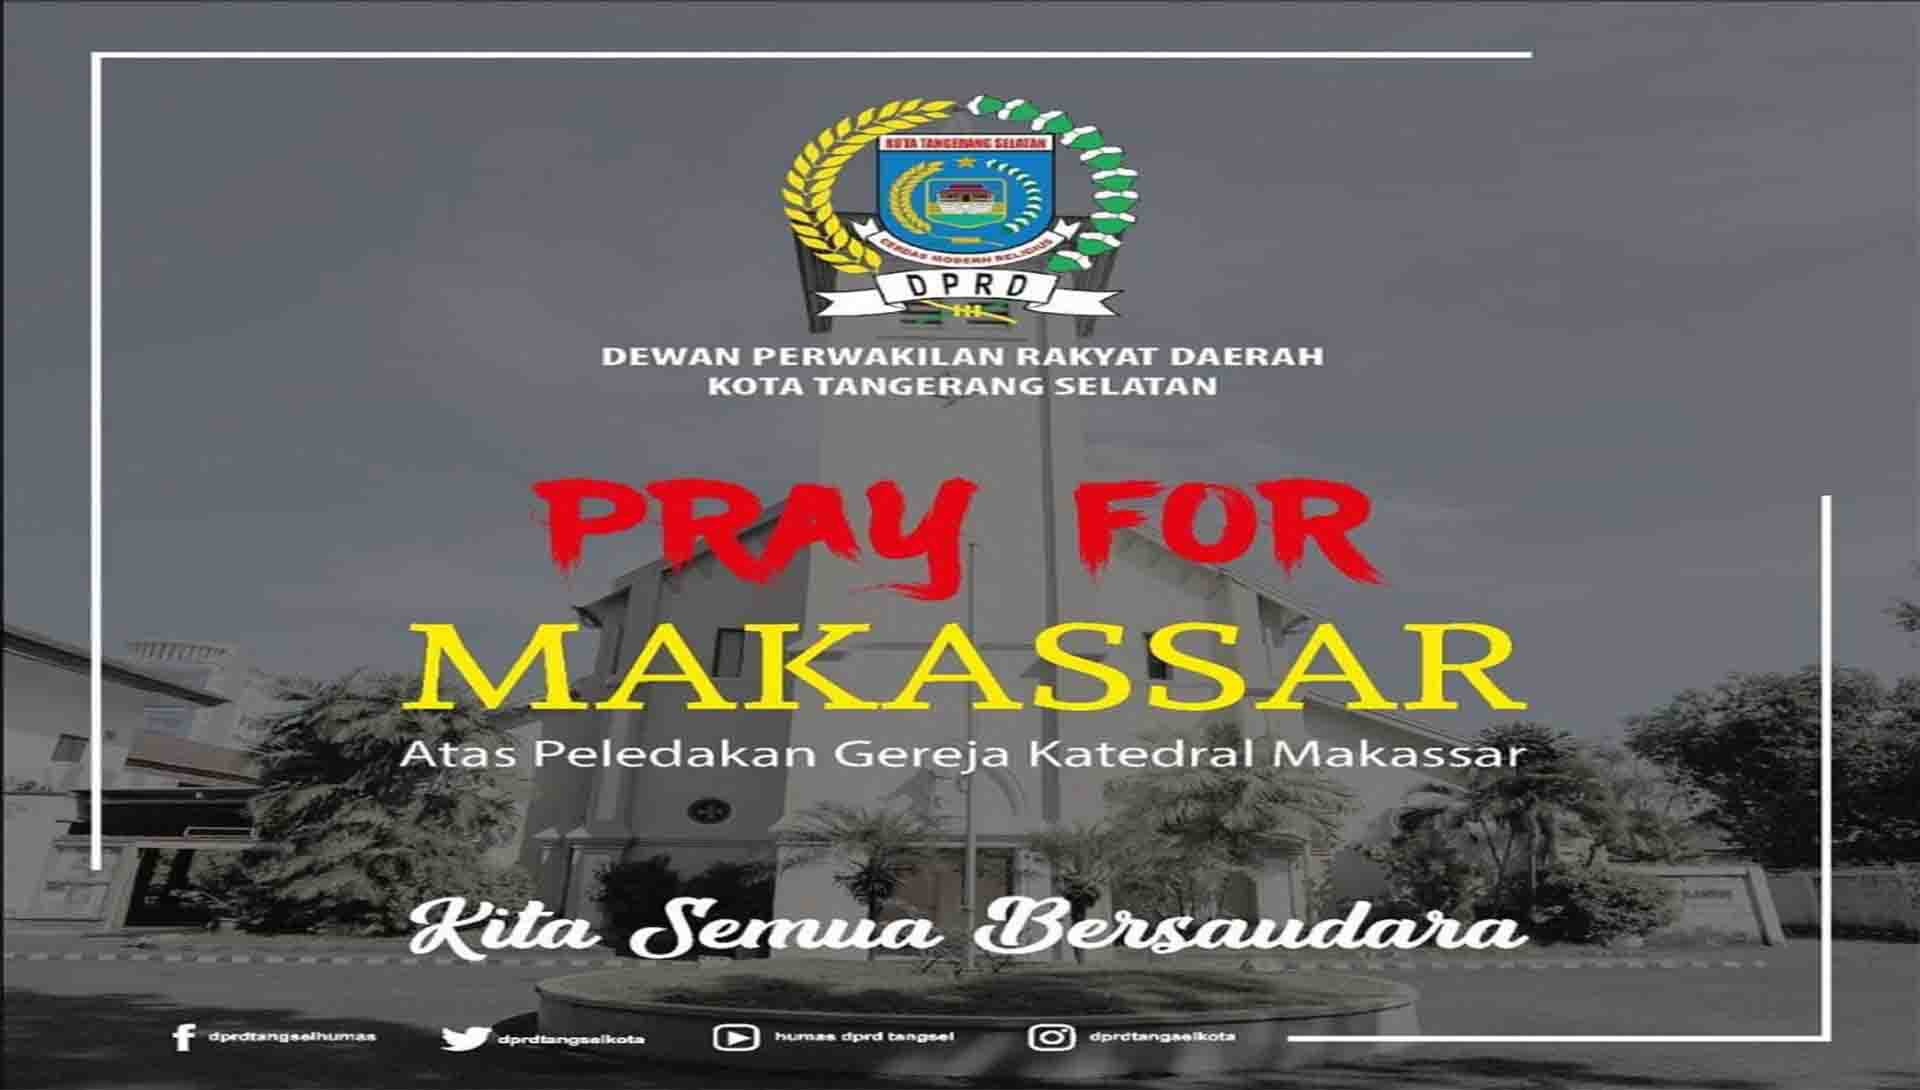 Turut berduka atas insiden ledakan di Gereja Katedral Makassar